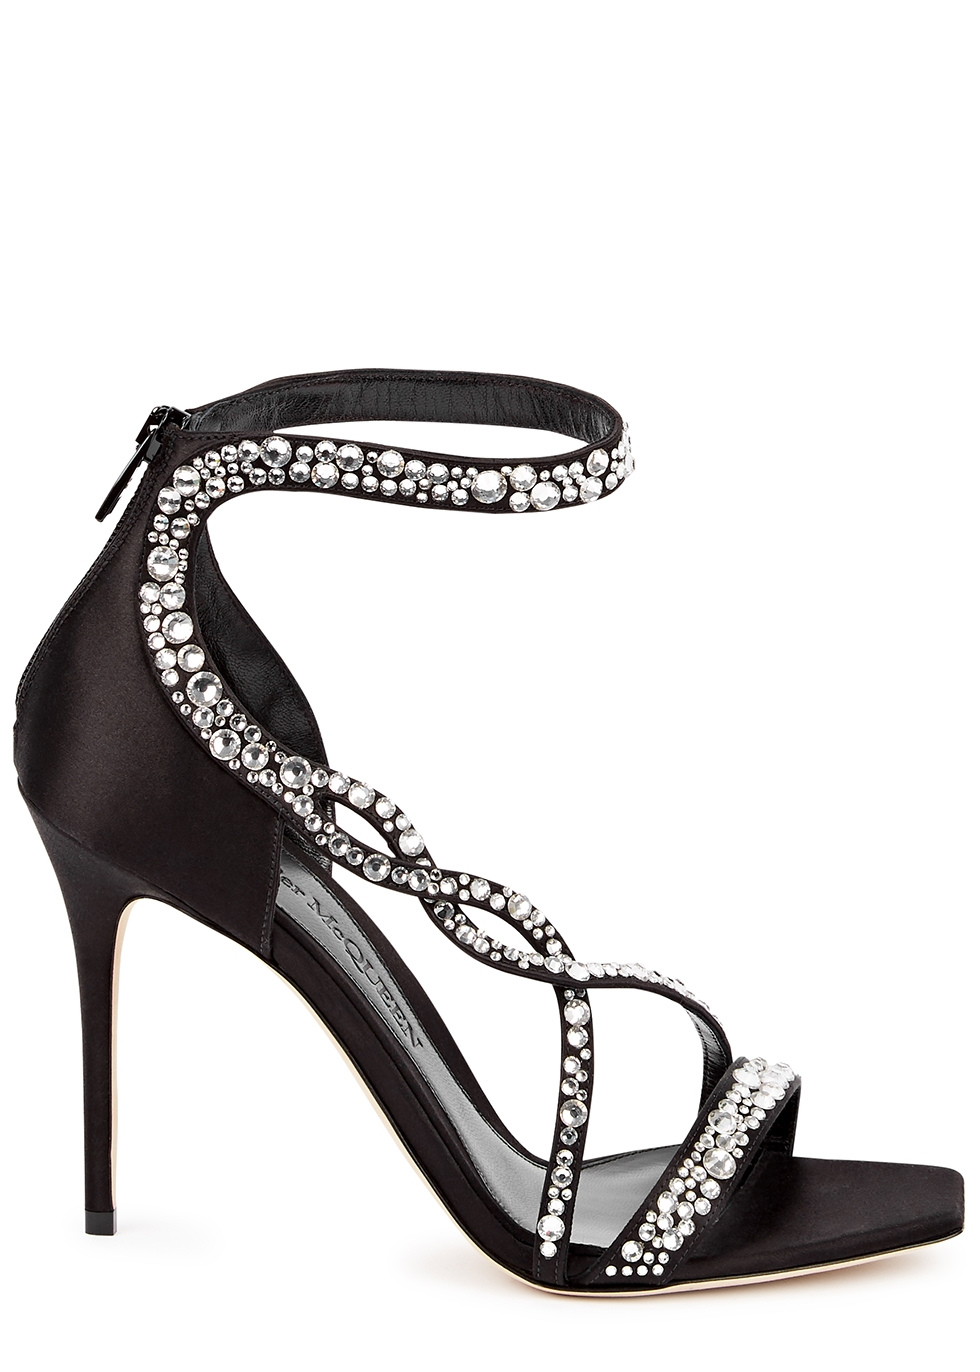 Alexander McQueen 100 black embellished satin sandals - Harvey Nichols